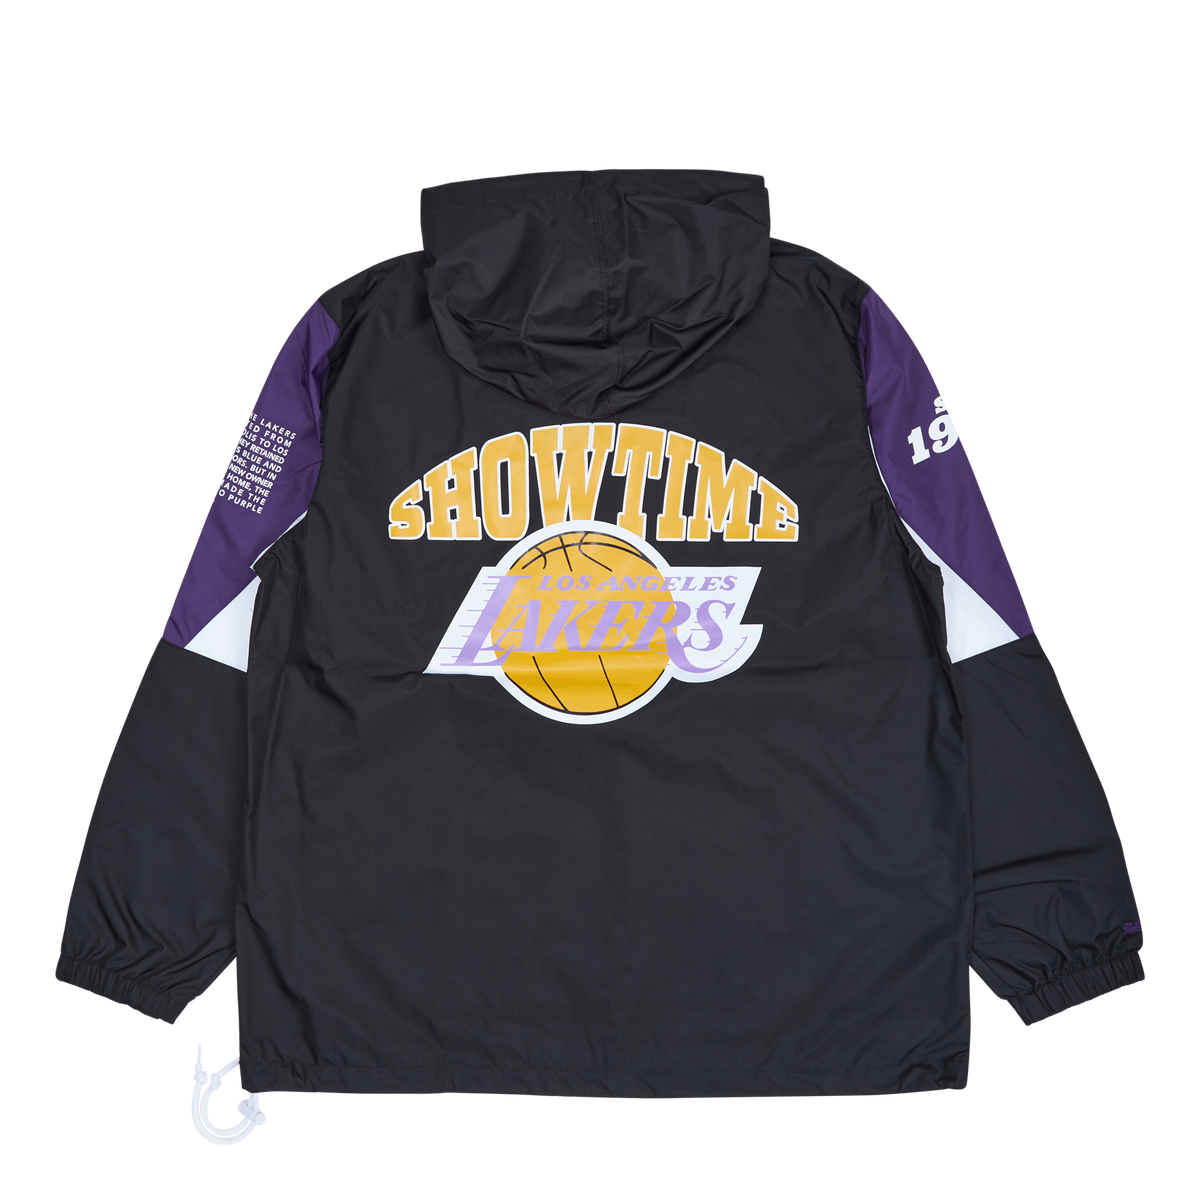 Lakers Team Origins Pullover Anorak